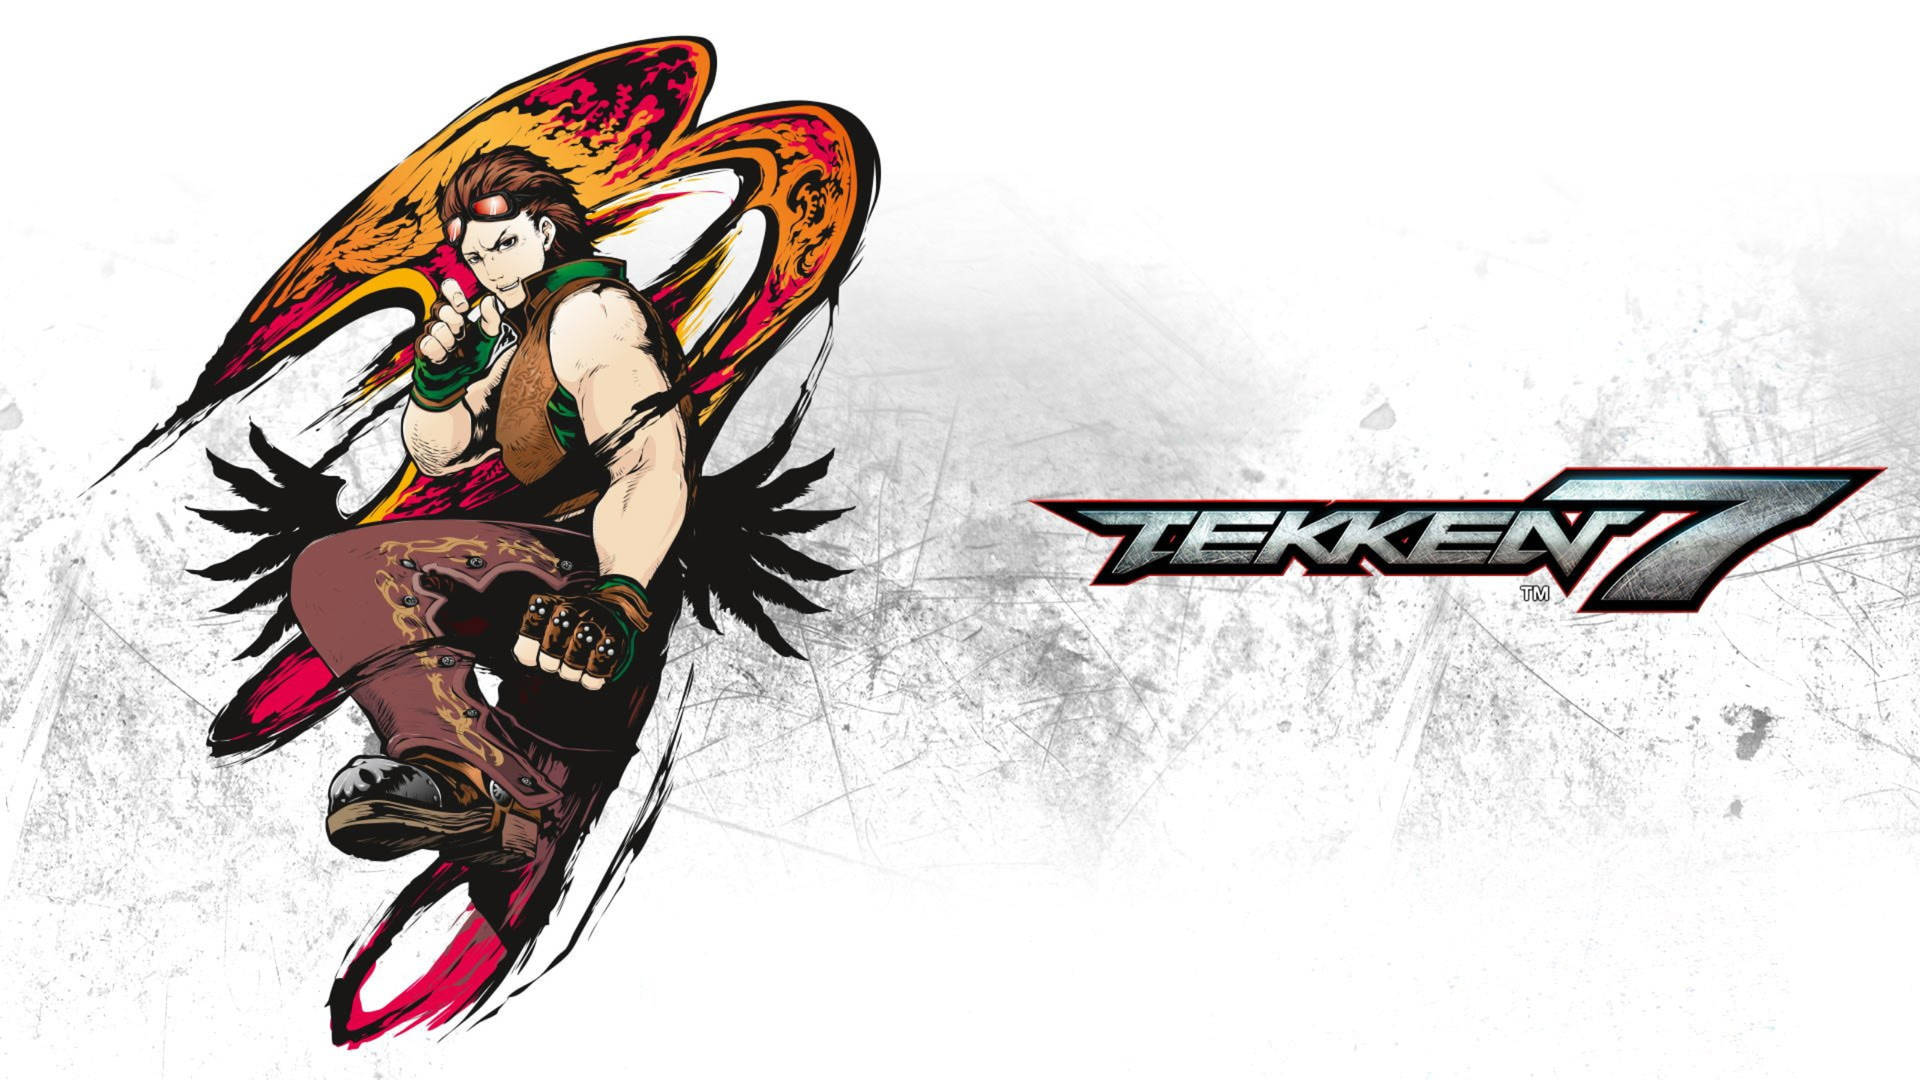 Hwoarang Tekken Cover Wallpaper